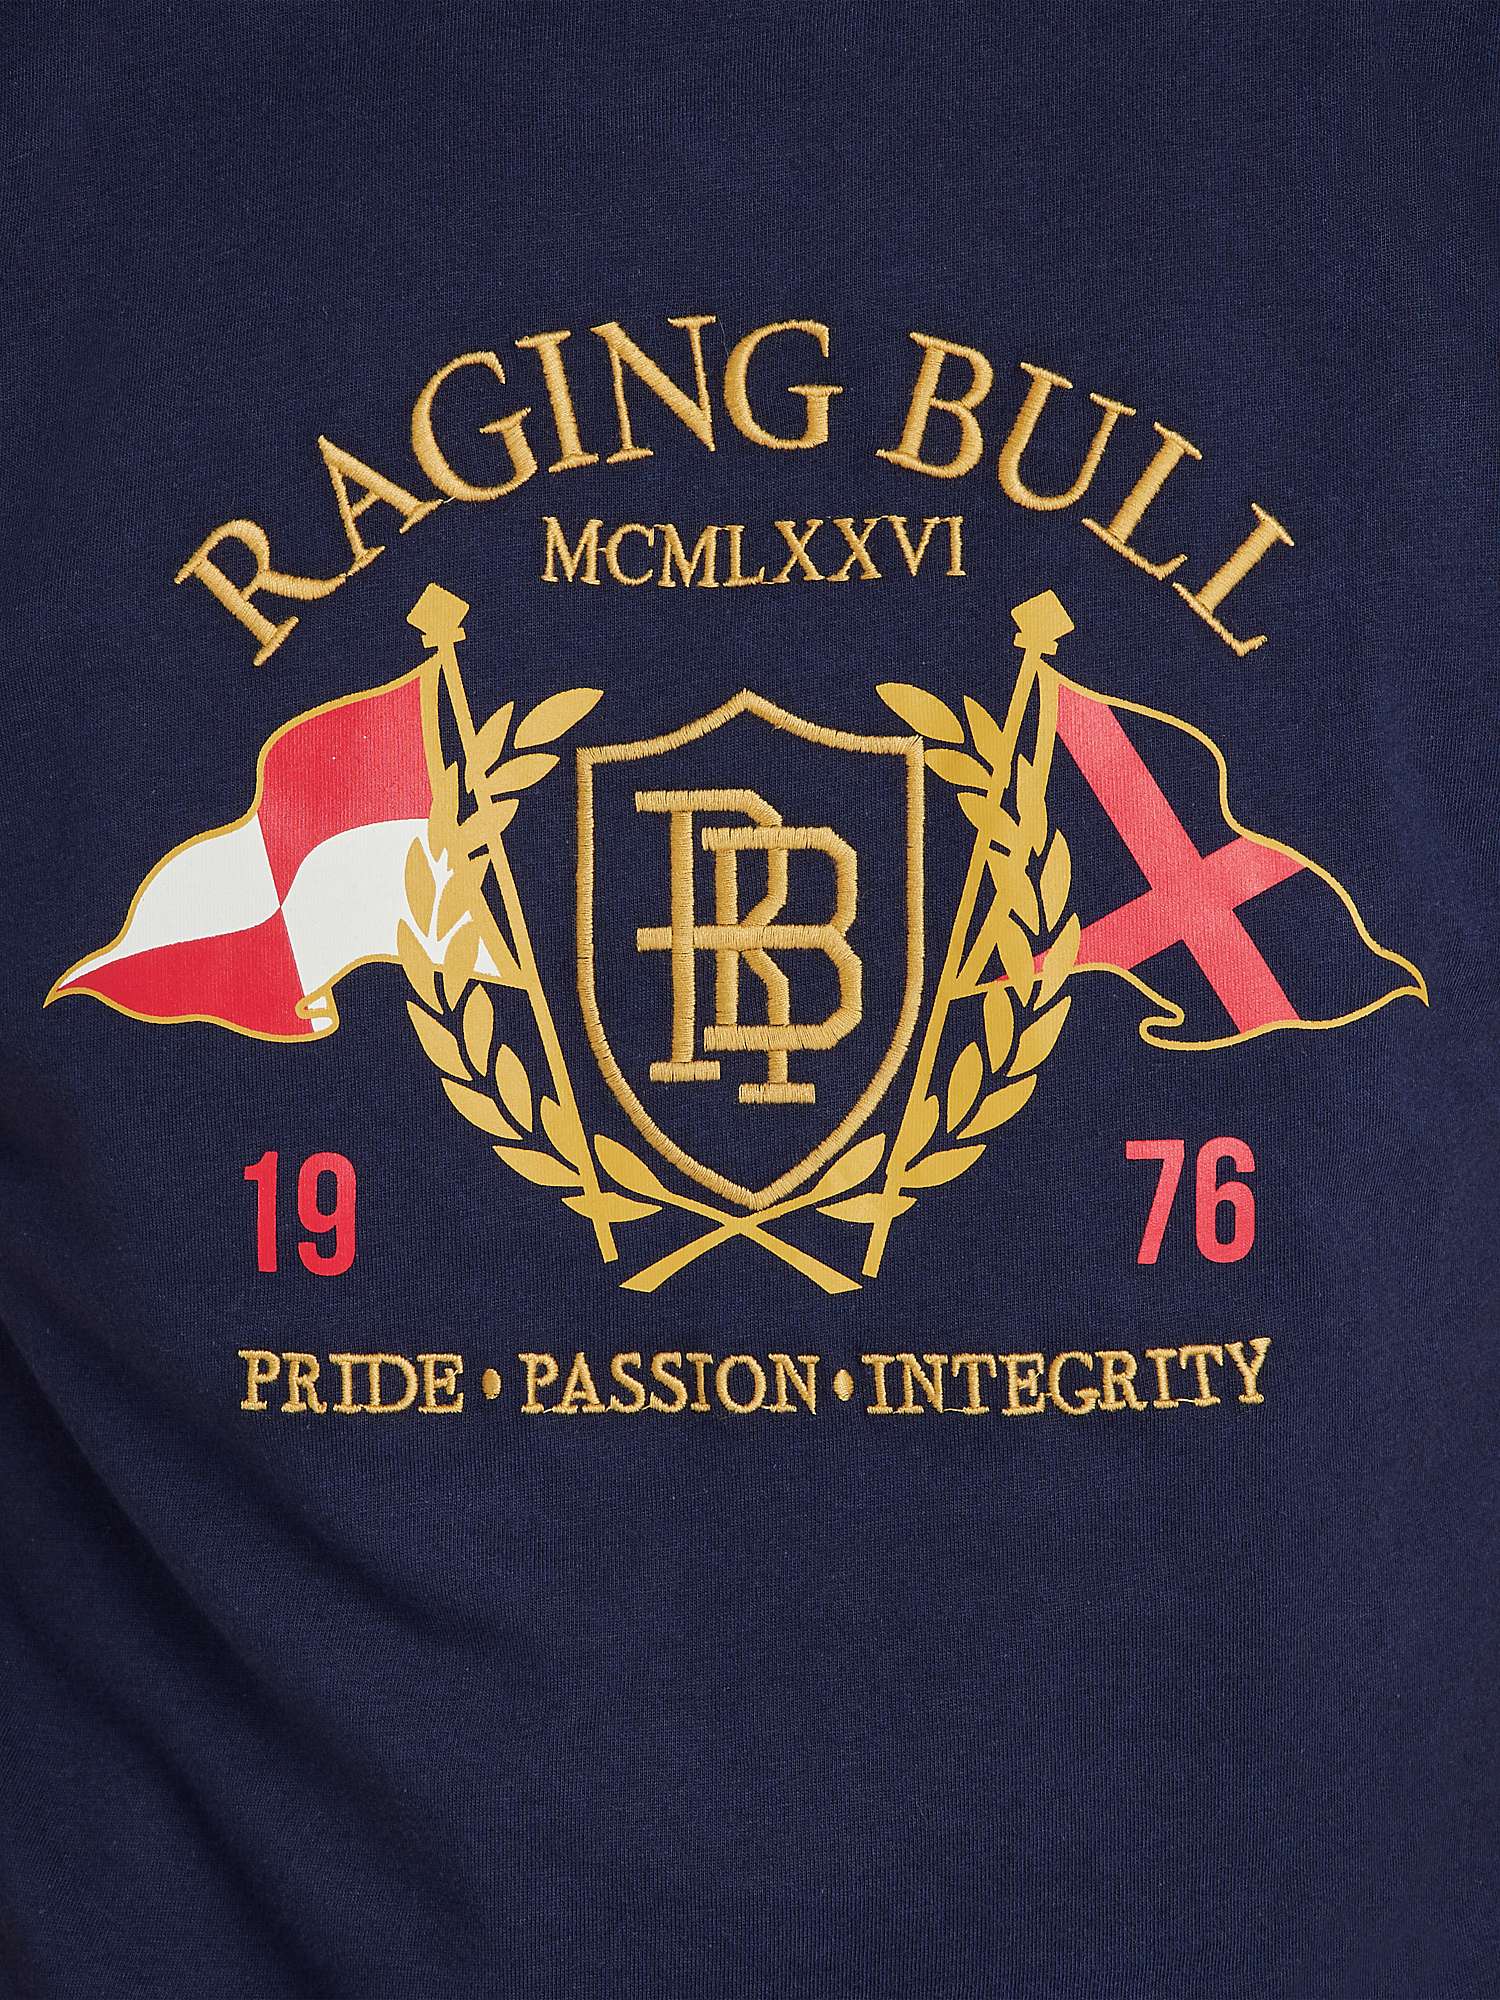 Buy Raging Bull Flags T-Shirt, Navy Online at johnlewis.com